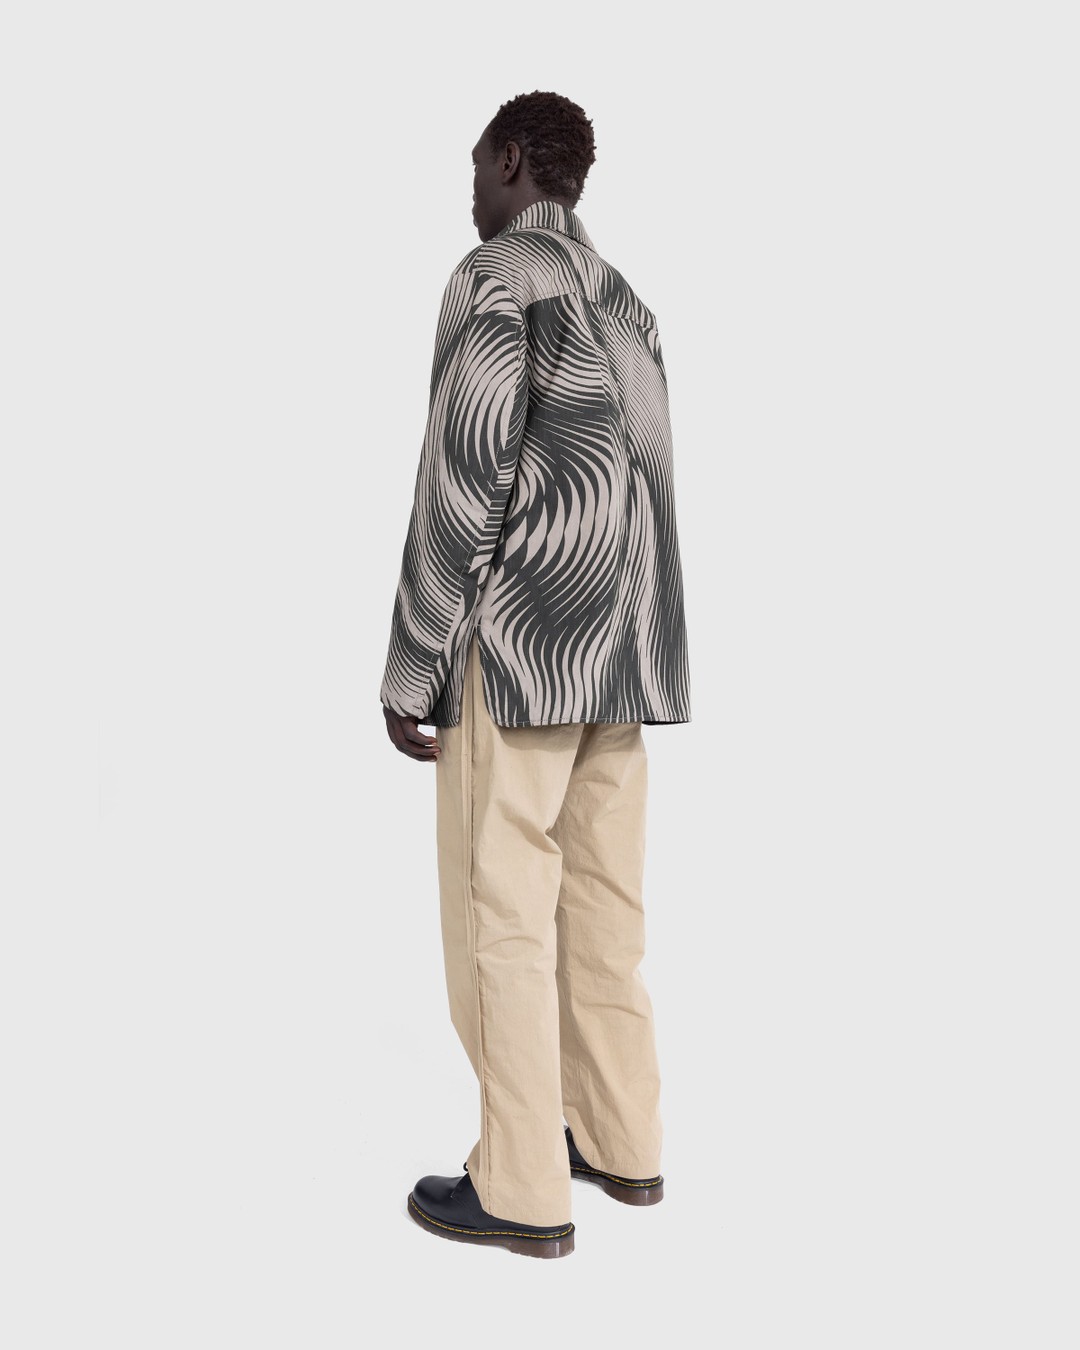 Dries van Noten – Valko Jacket Anthracite - Jackets - Grey - Image 4